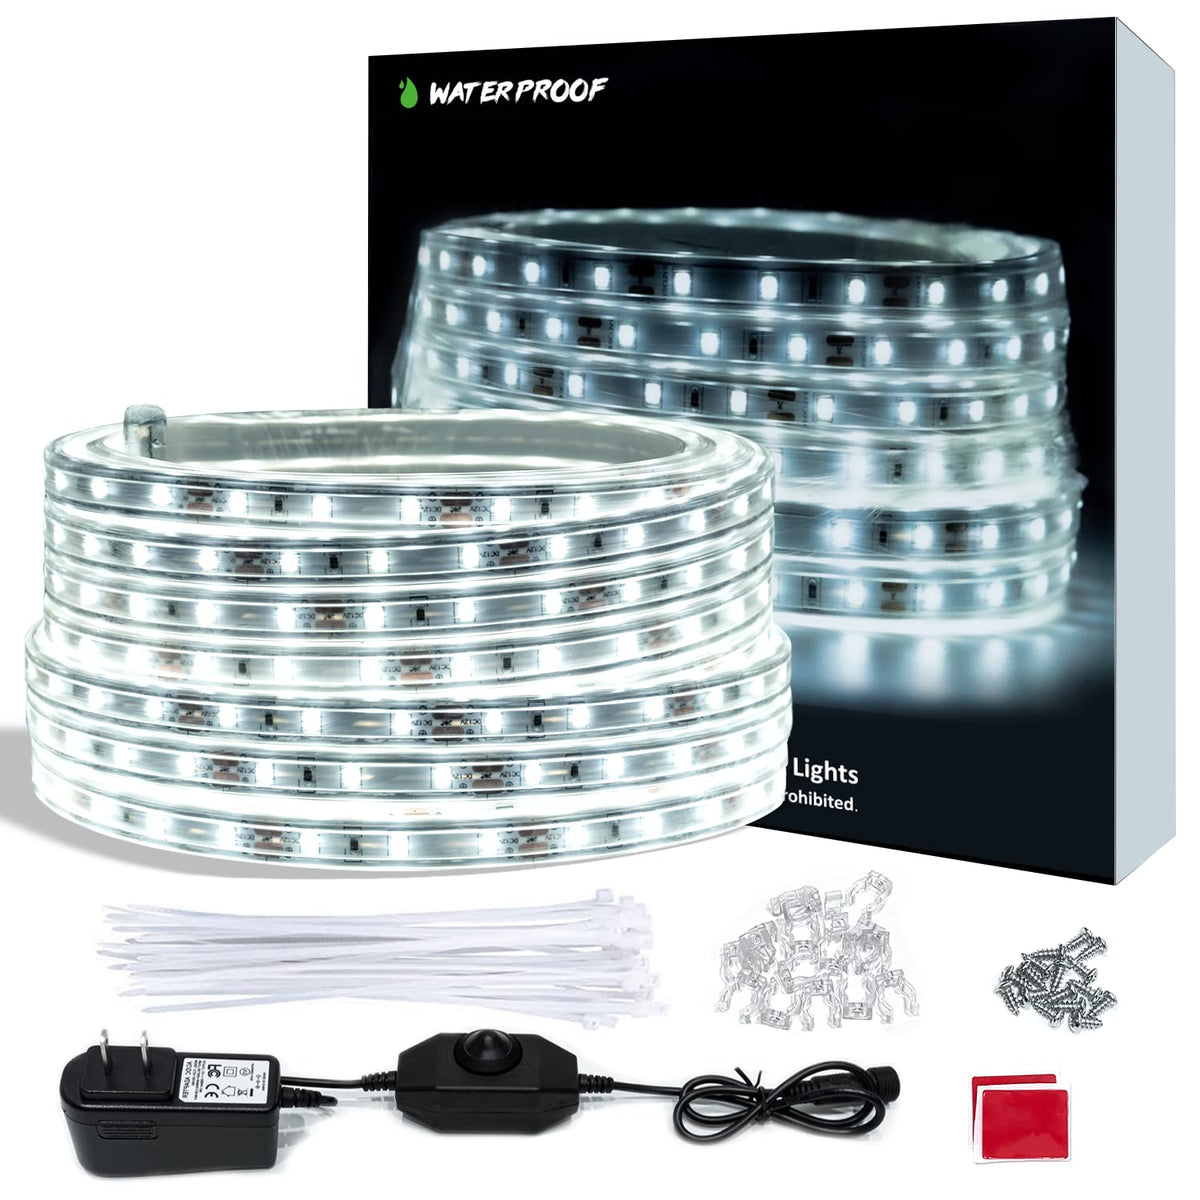 ollrieu 50ft Rope Lights Outdoor Waterproof White LED Strip Light